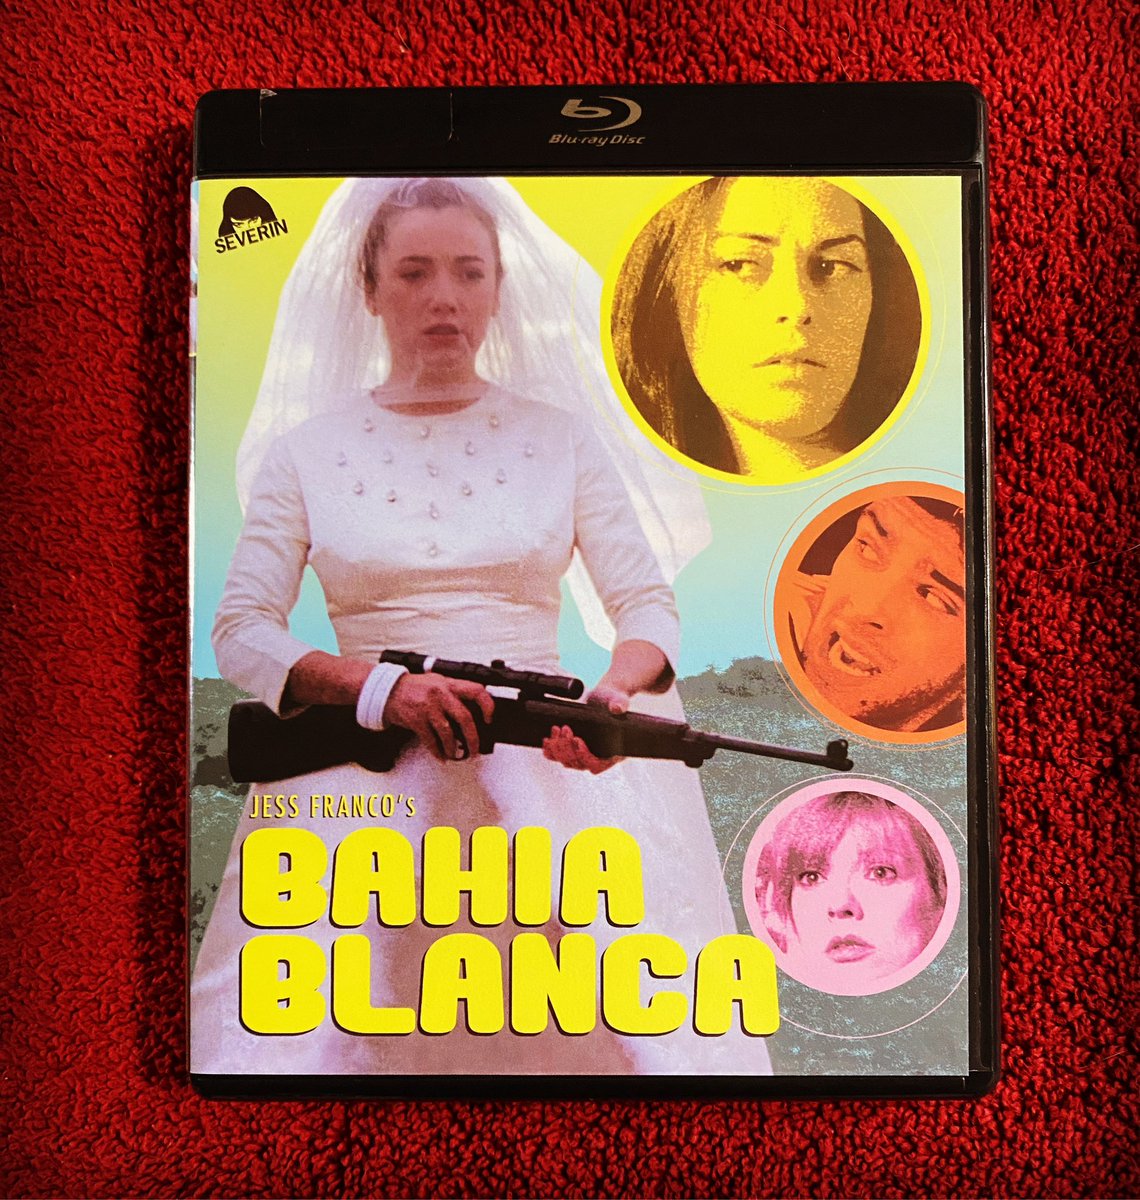 Happy Franco Friday, humans! 

Now watching - BAHIA BLANCA (1984) D. Jess Franco

#jessfranco #bahiablanca #severinfilms